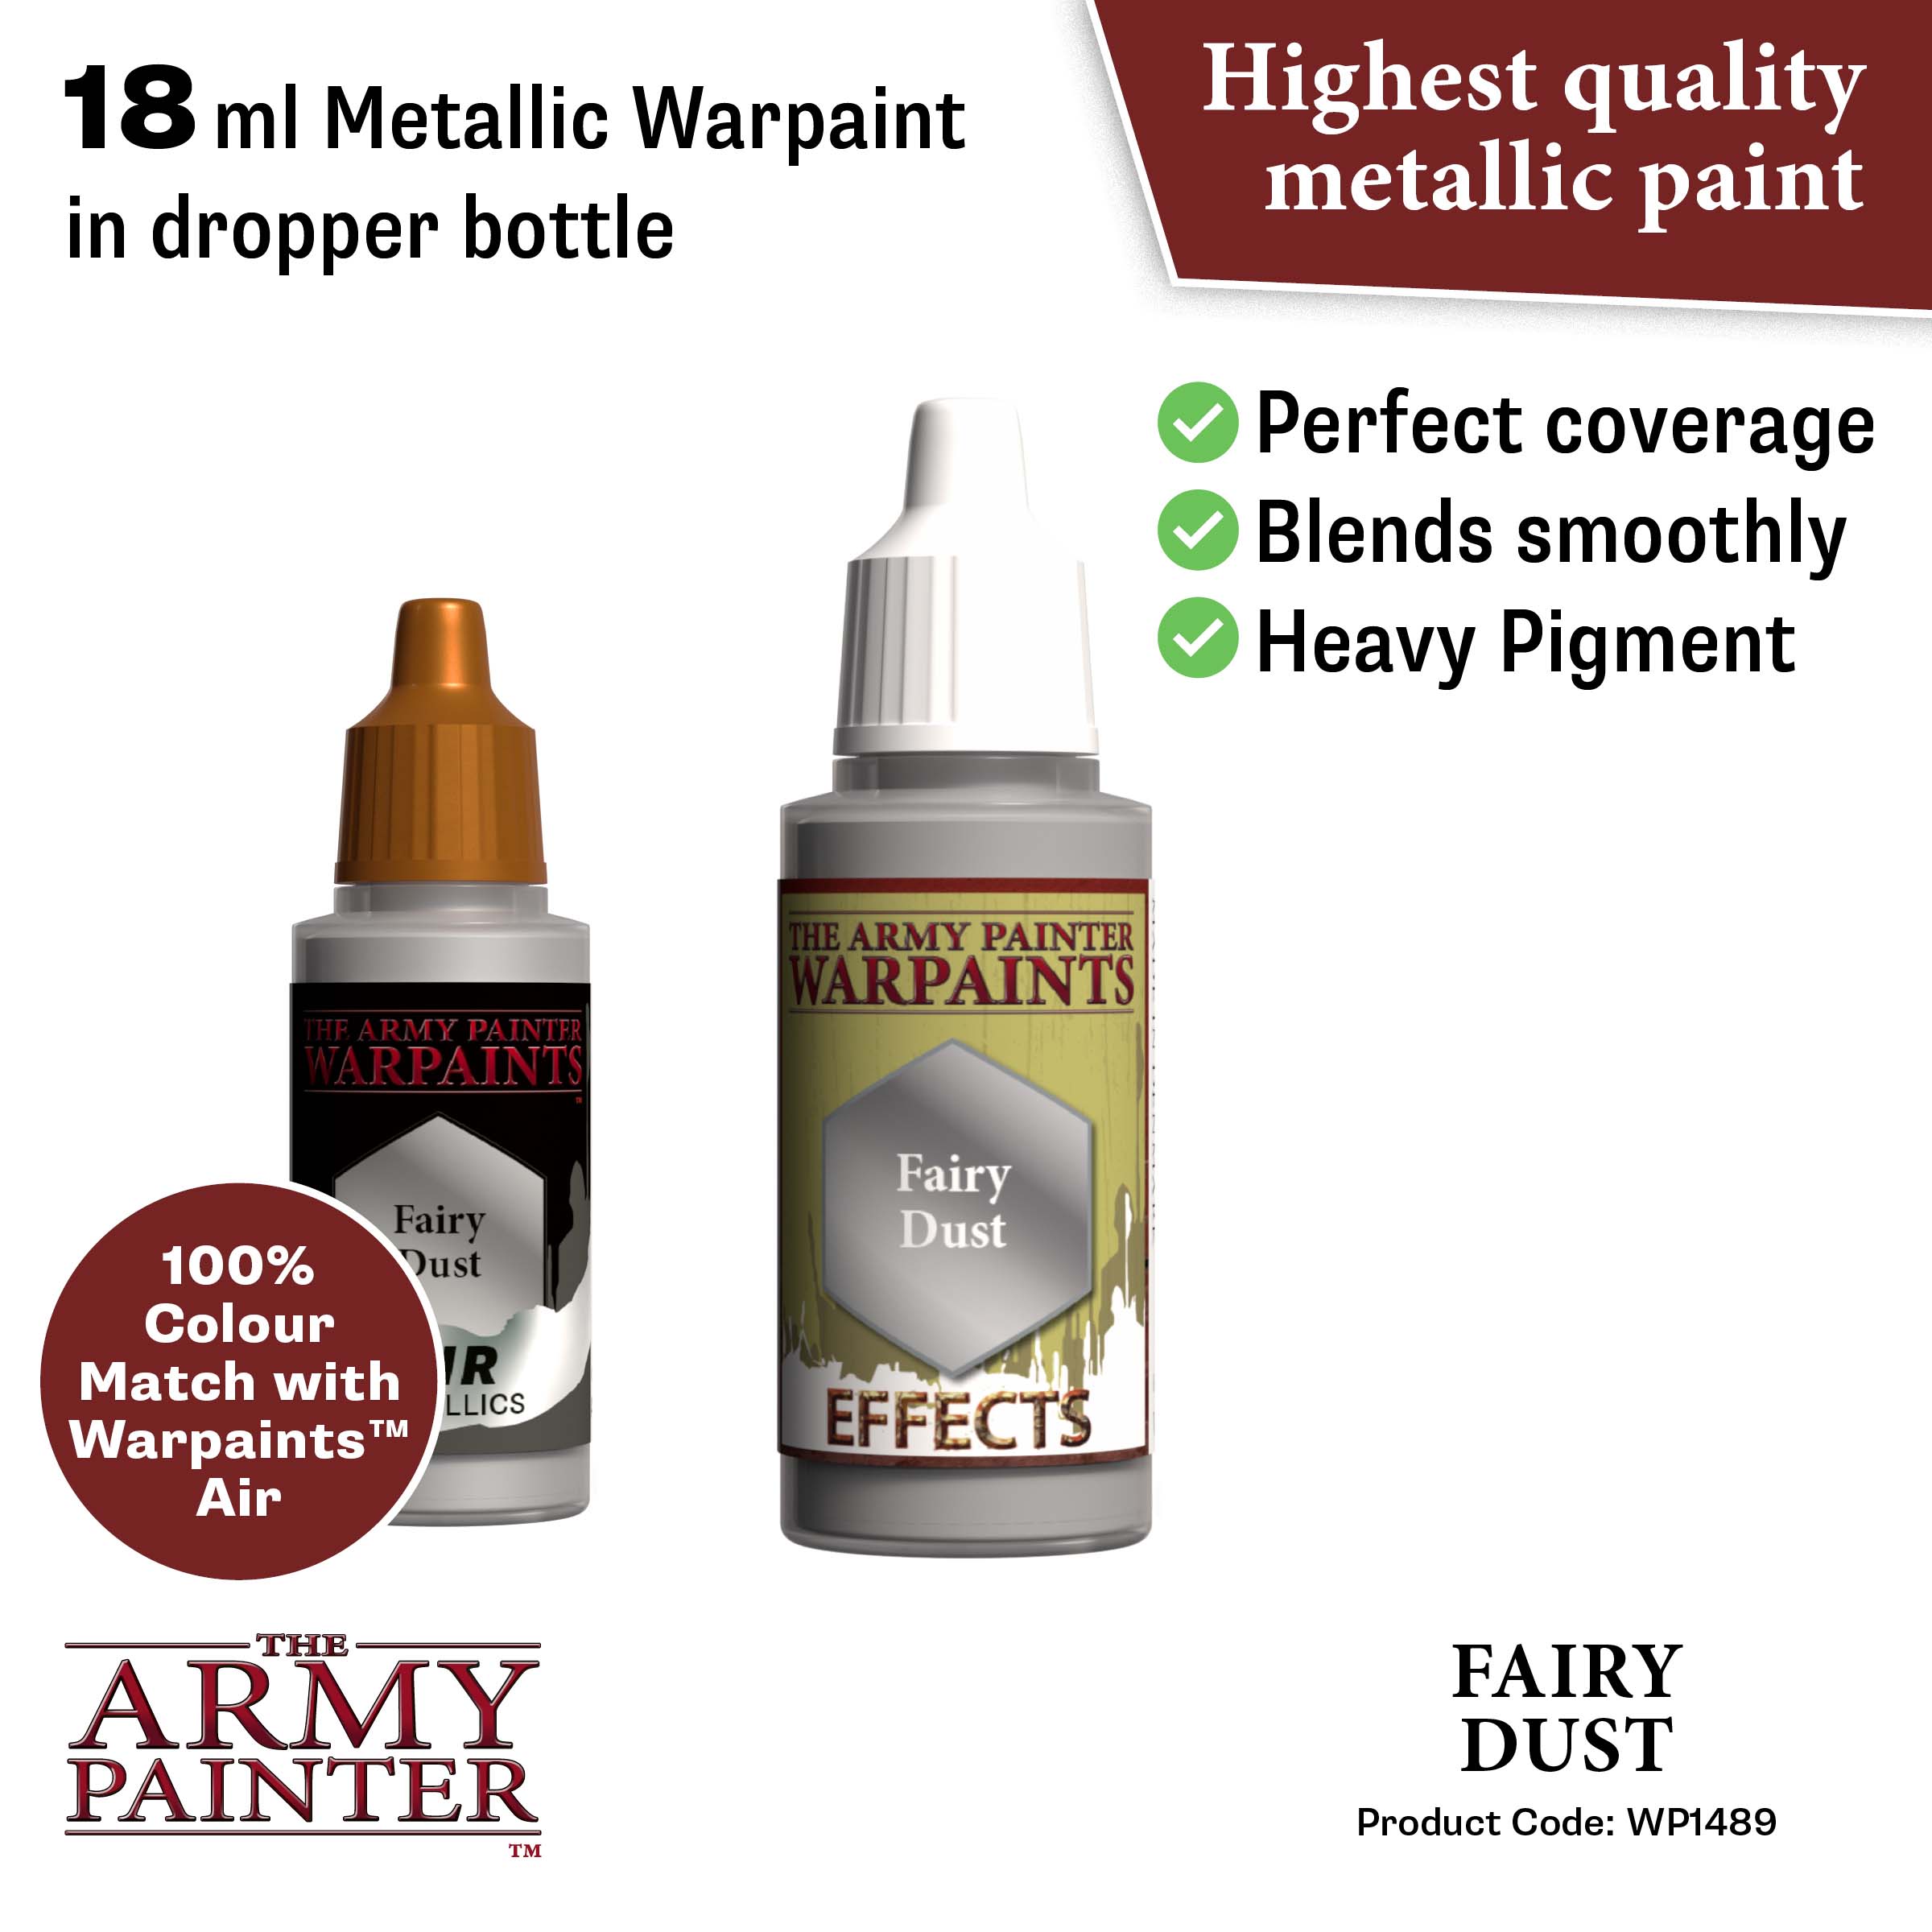 The Army Painter Metallics Warpaints: Glitter Green (WP1484